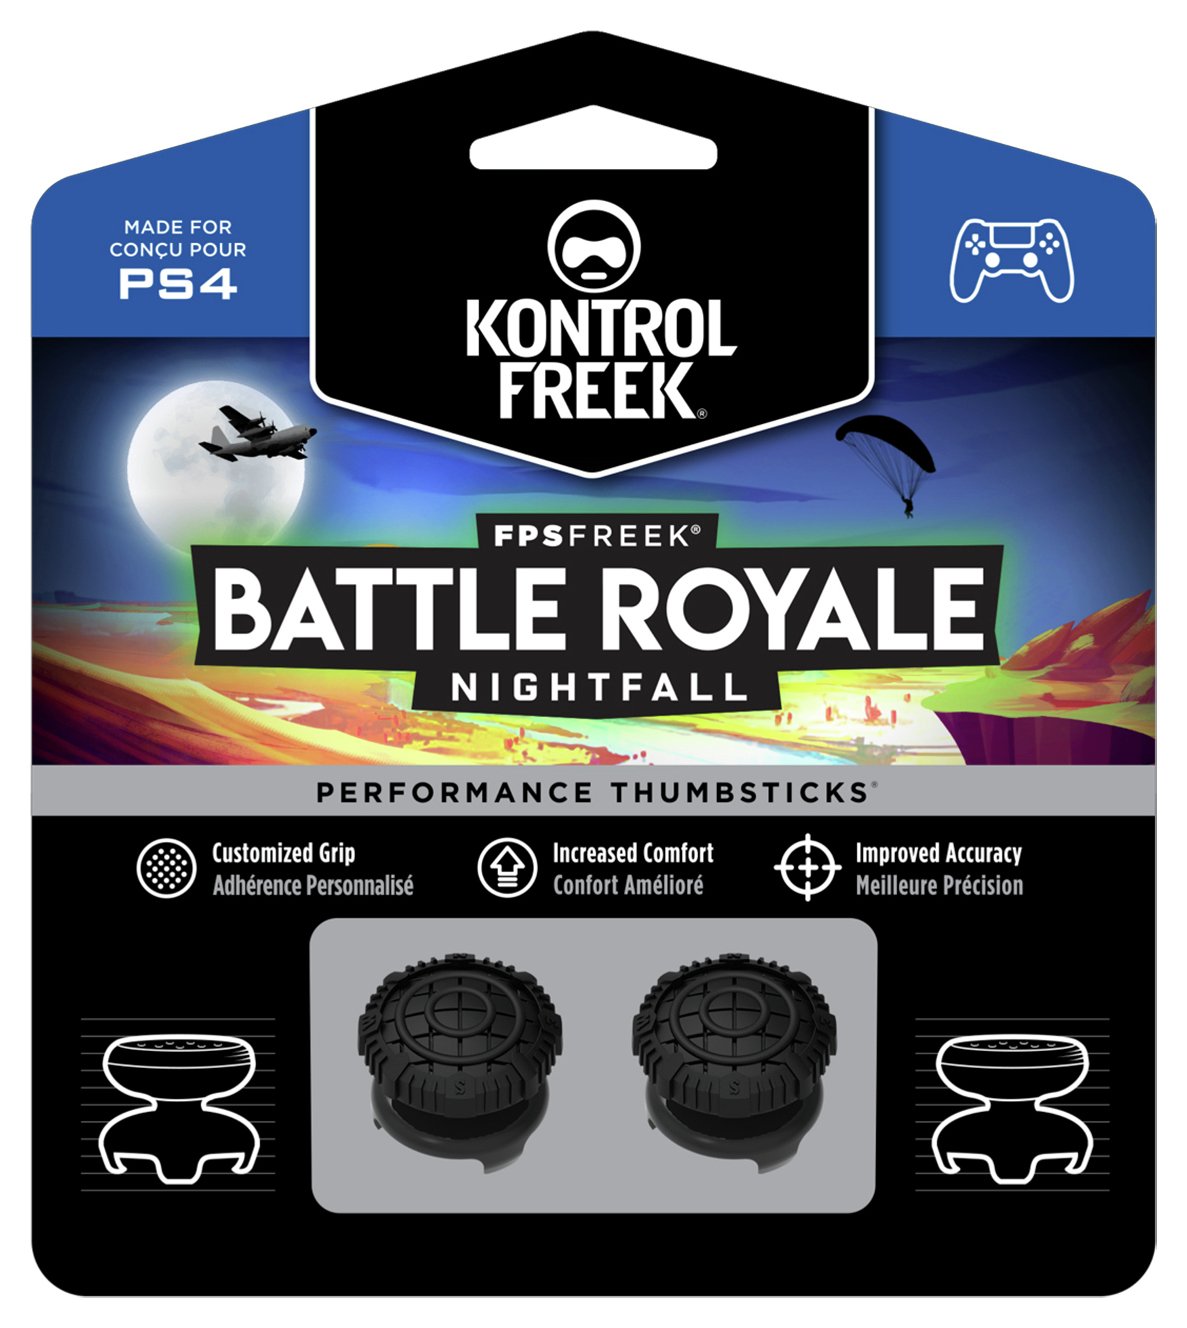 KontrolFreek Battle Royale: Nightfall PS4 Thumbsticks